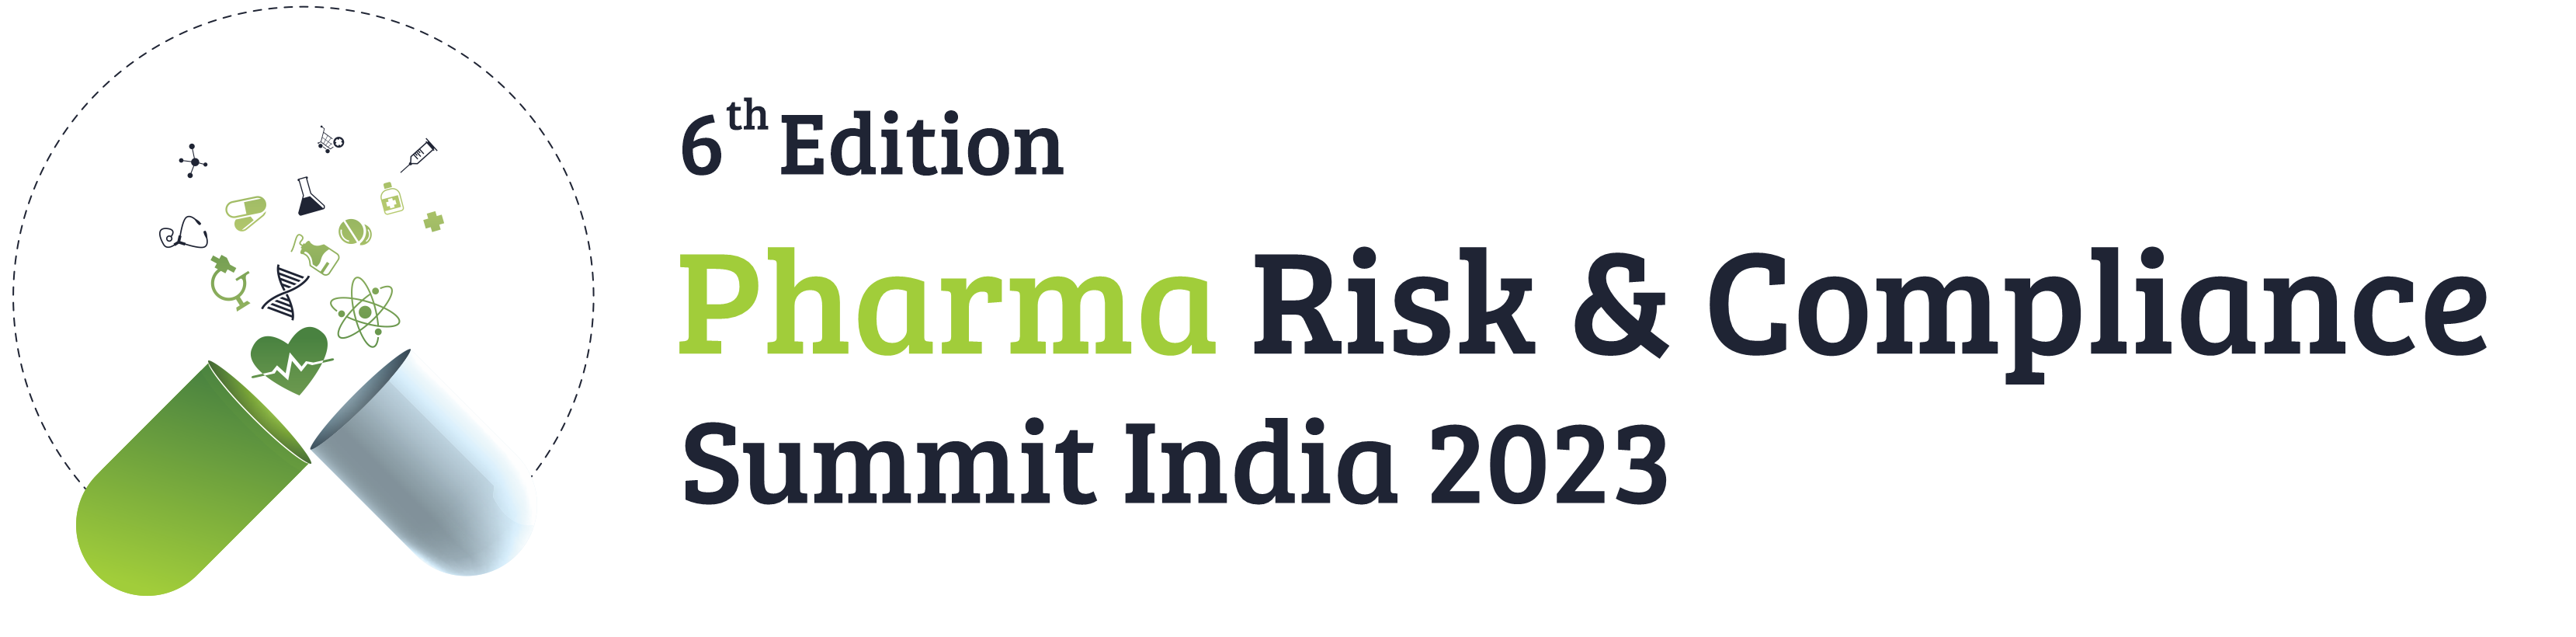 6th Edition Pharma Risk & Compliance Summit India 2023